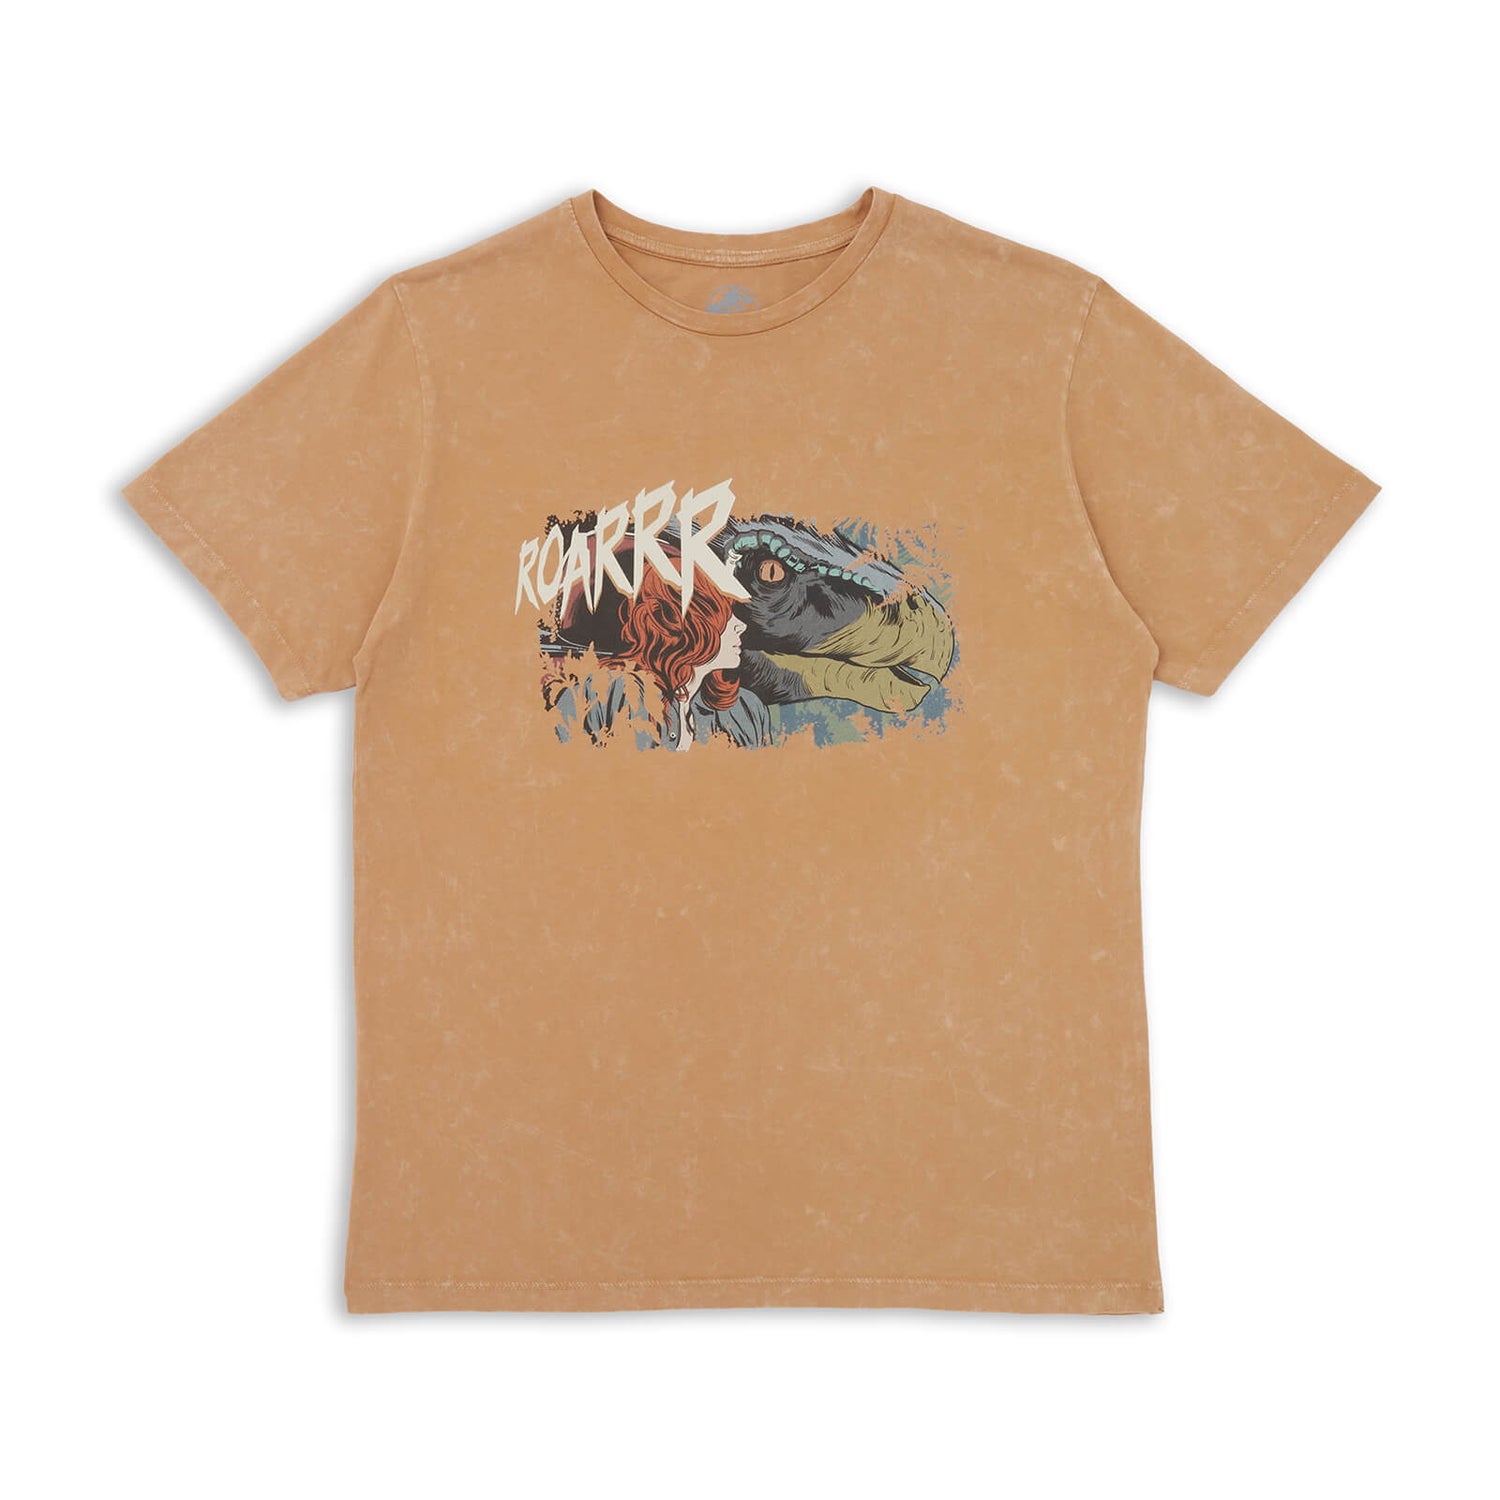 Jurassic World Roarrr Unisex T-Shirt - Tan Acid Wash